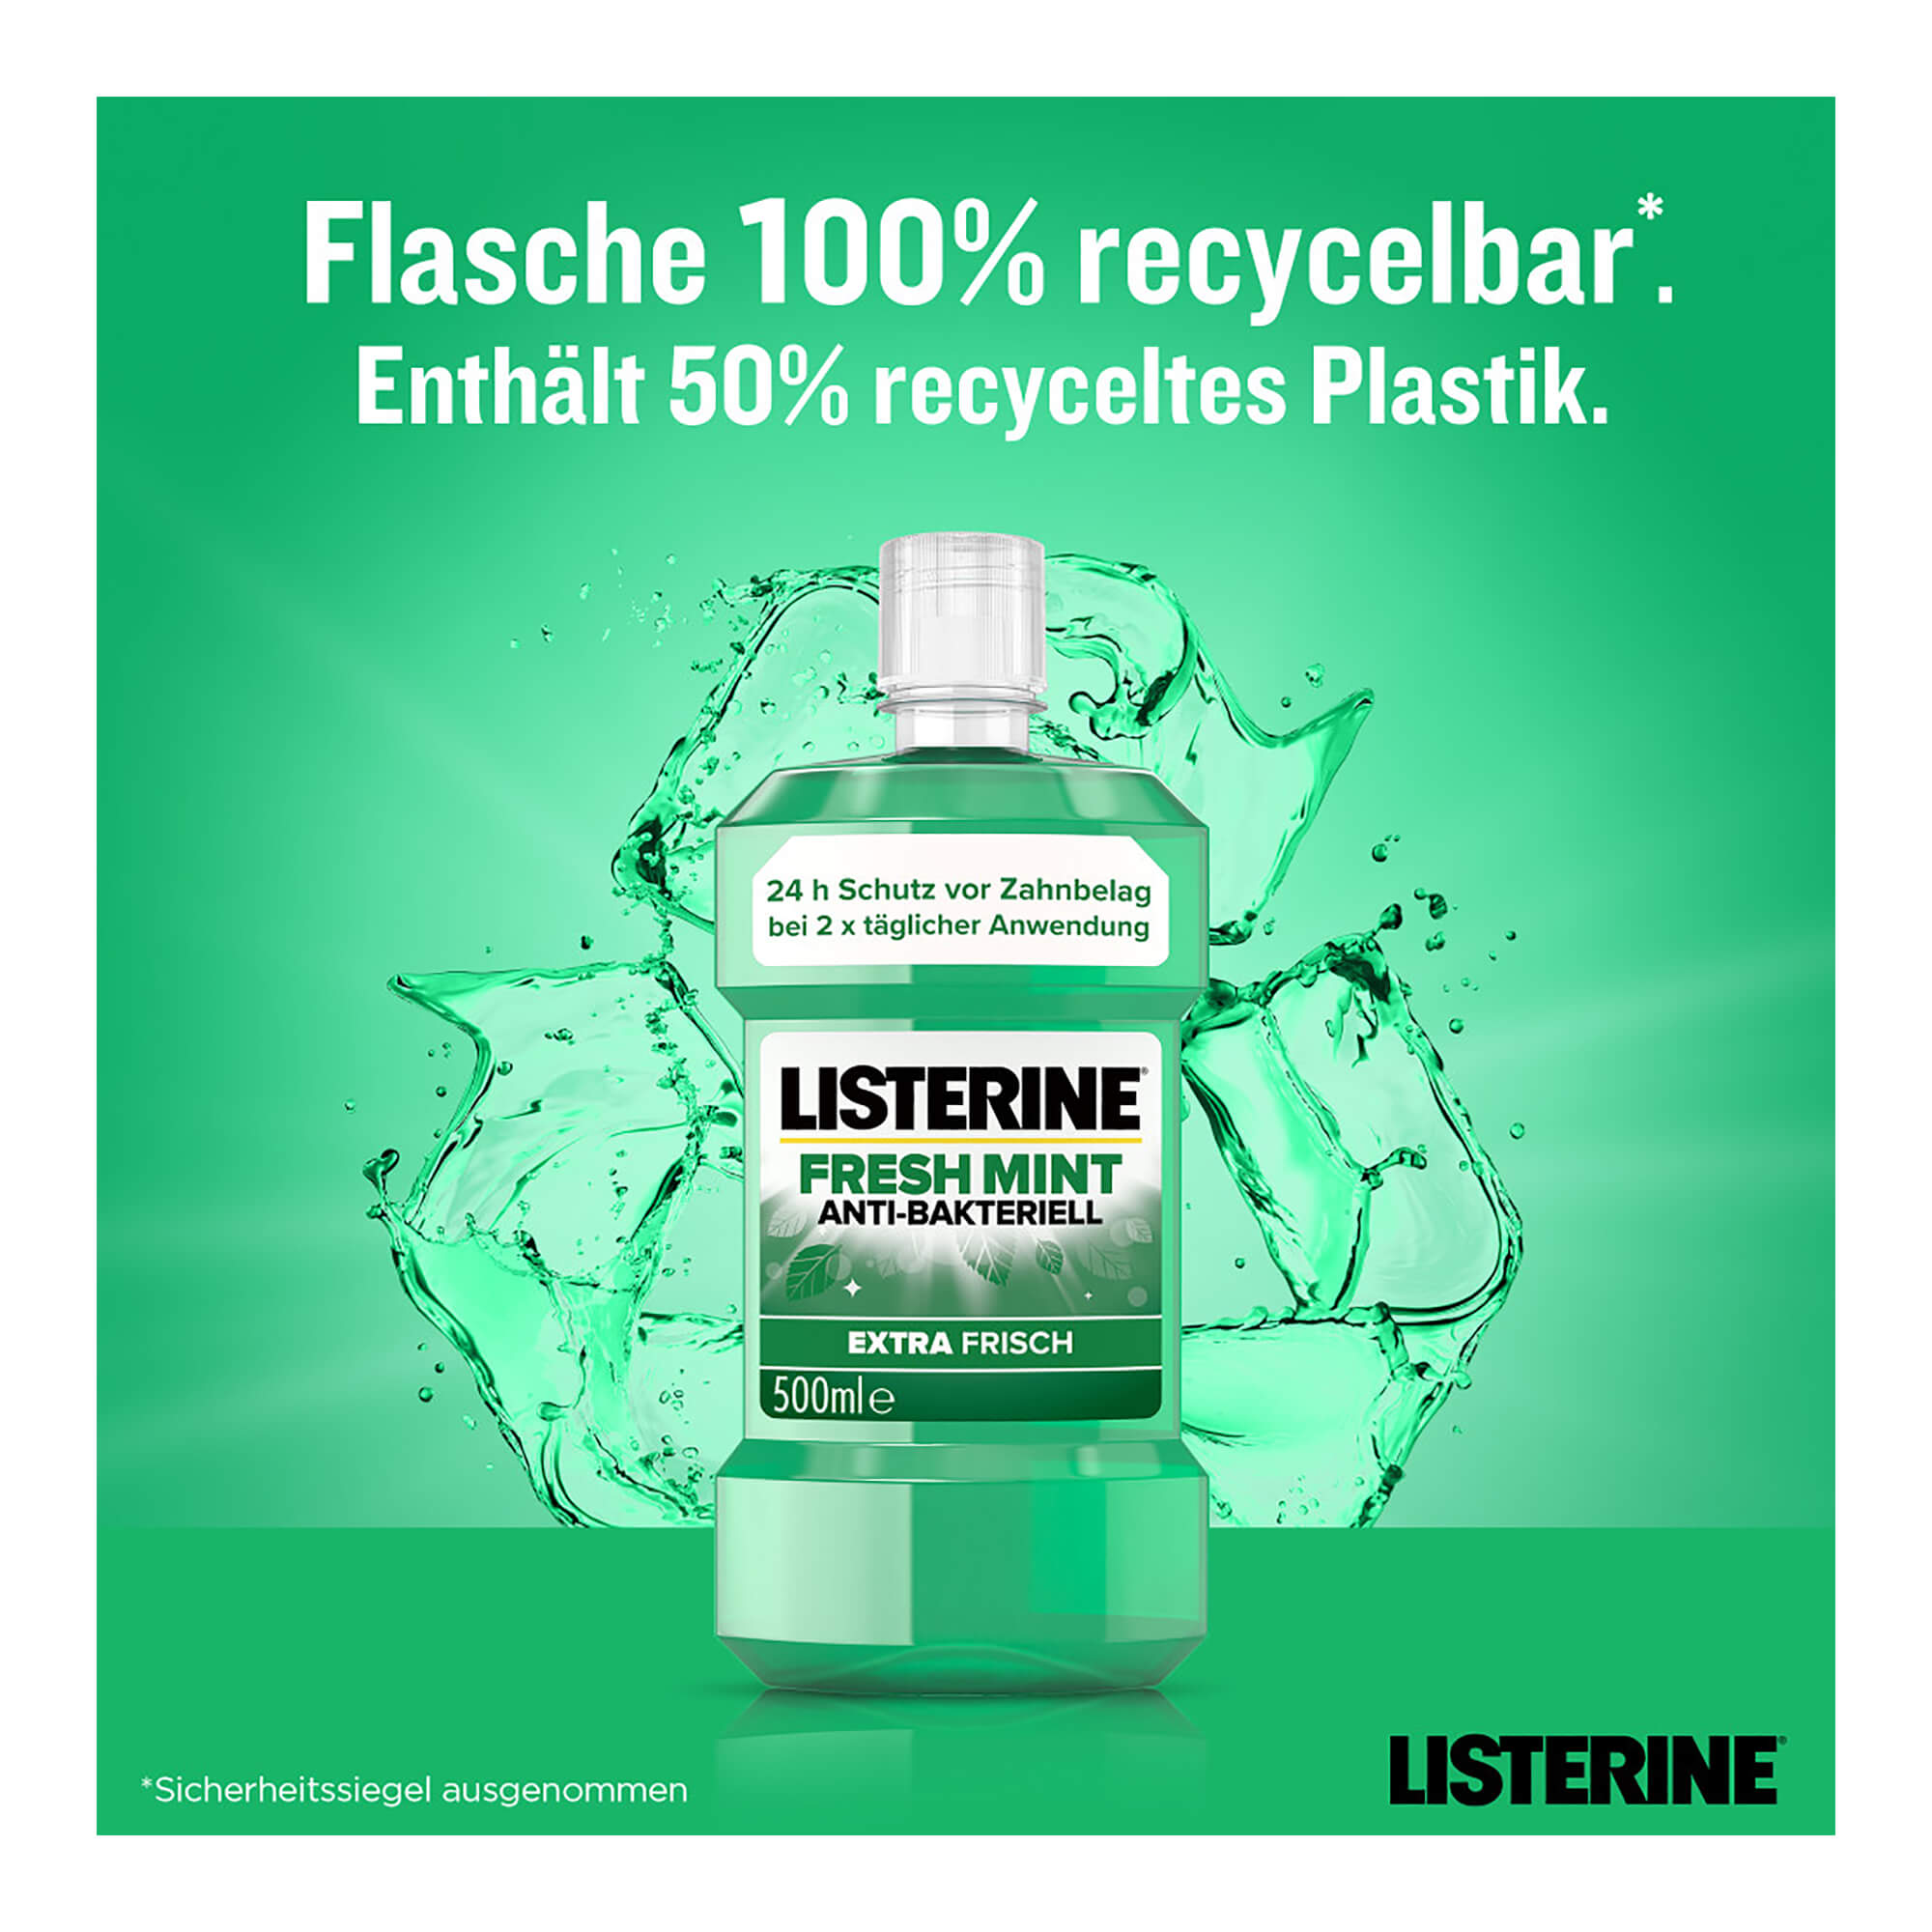 Listerine Fresh Mint recycelbar